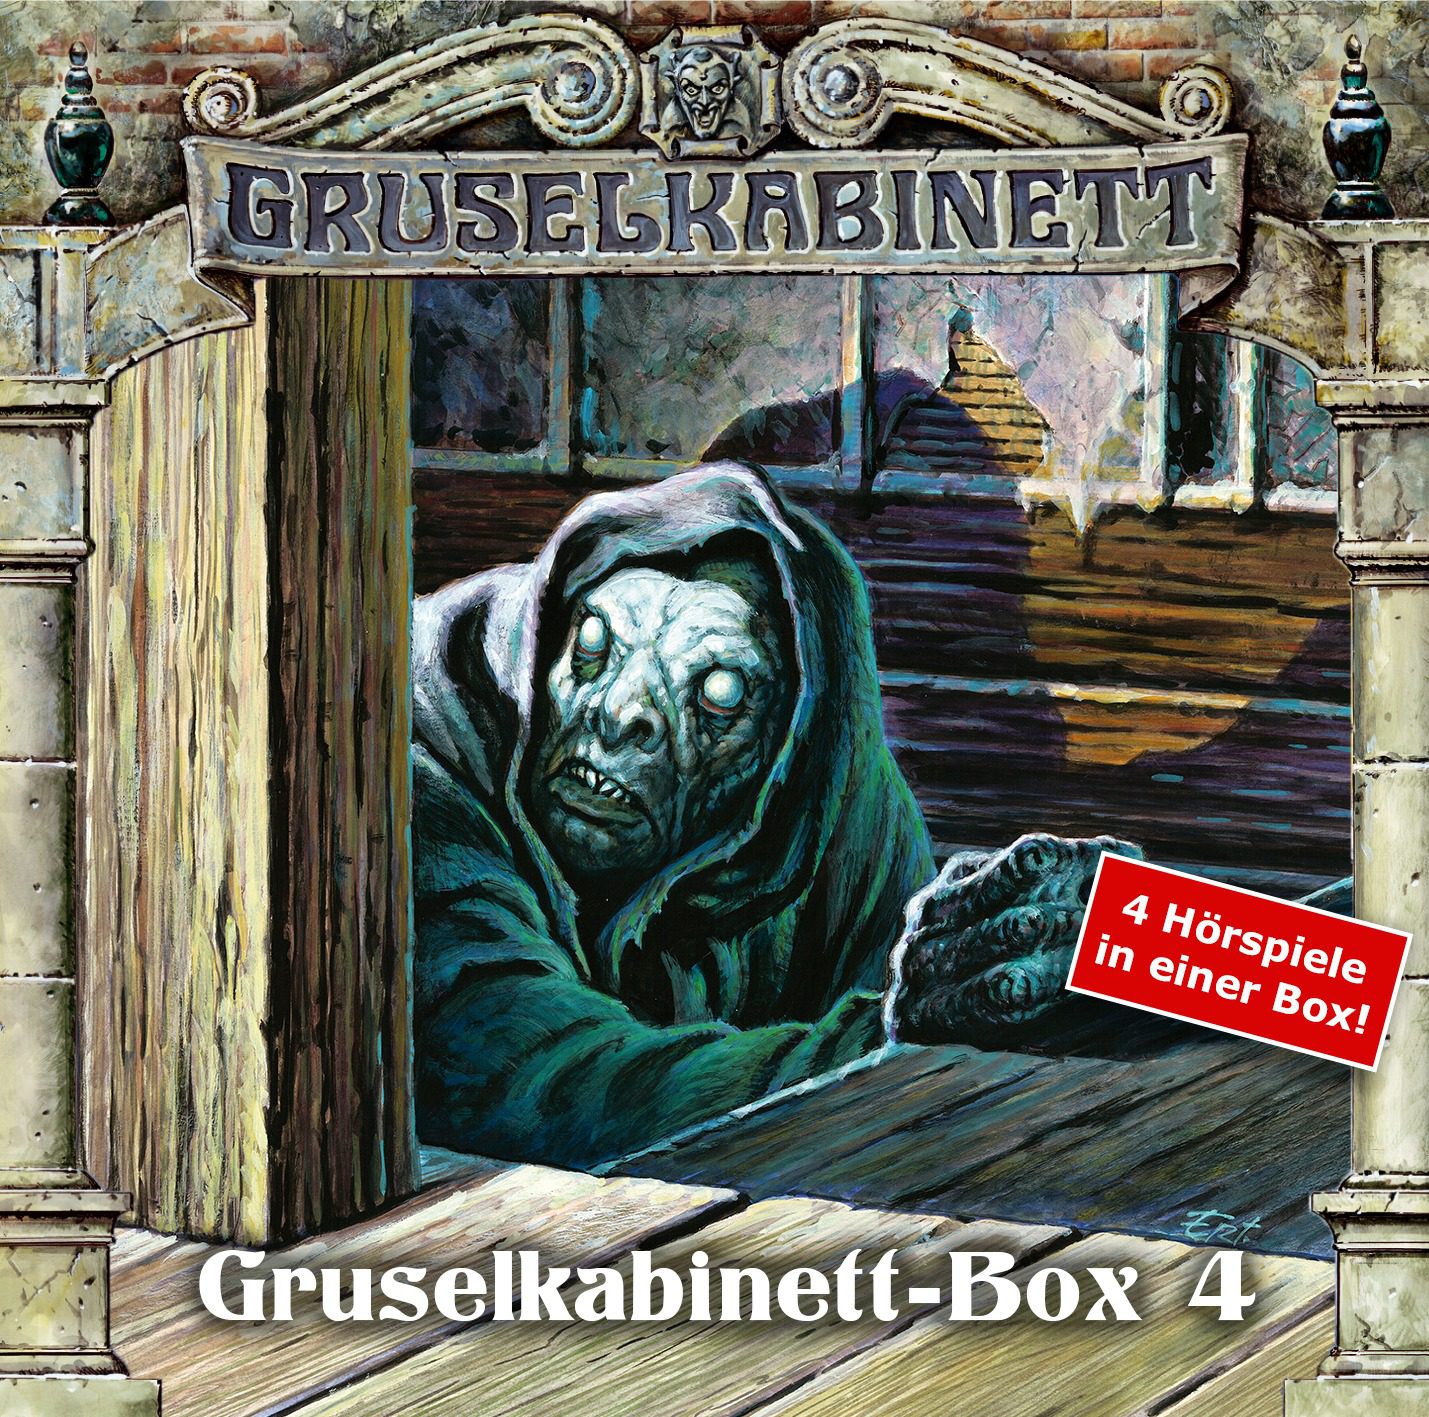 Gruselkabinett-Box 4